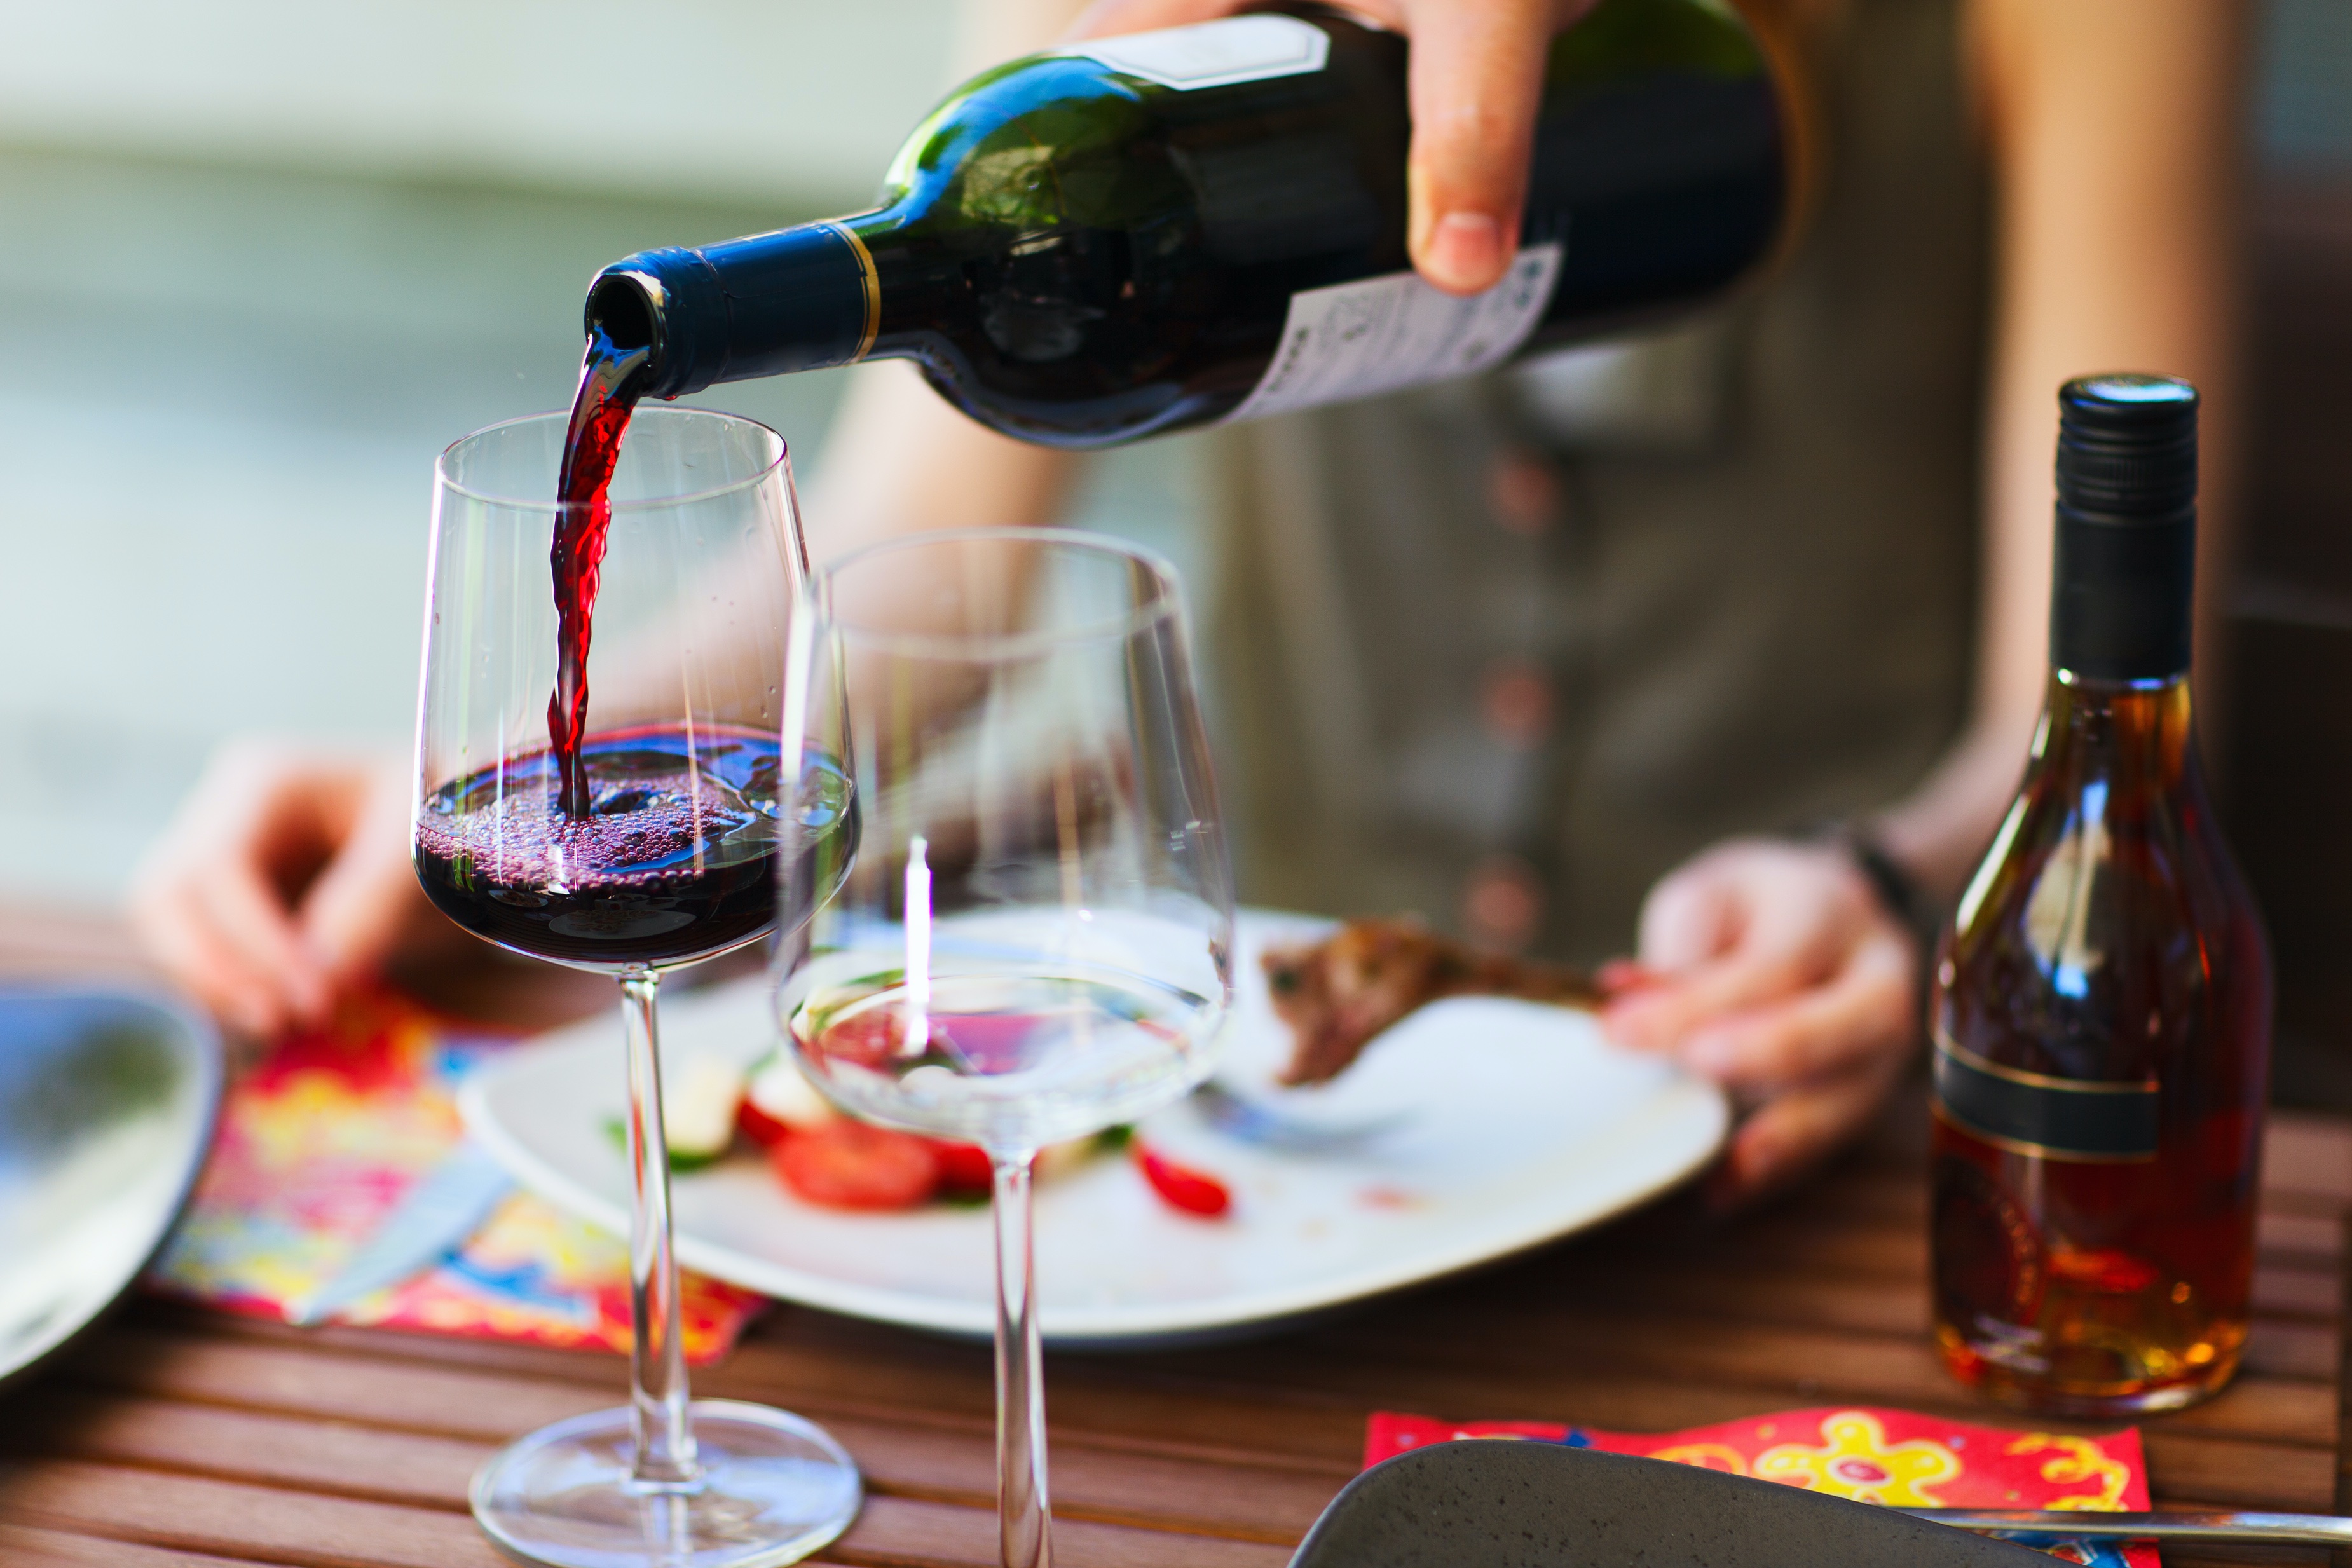 Антибиотики бокал вина можно. Бокал с вином. Наливает вино. Алкоголь в ресторане. Вино наливают в бокал.